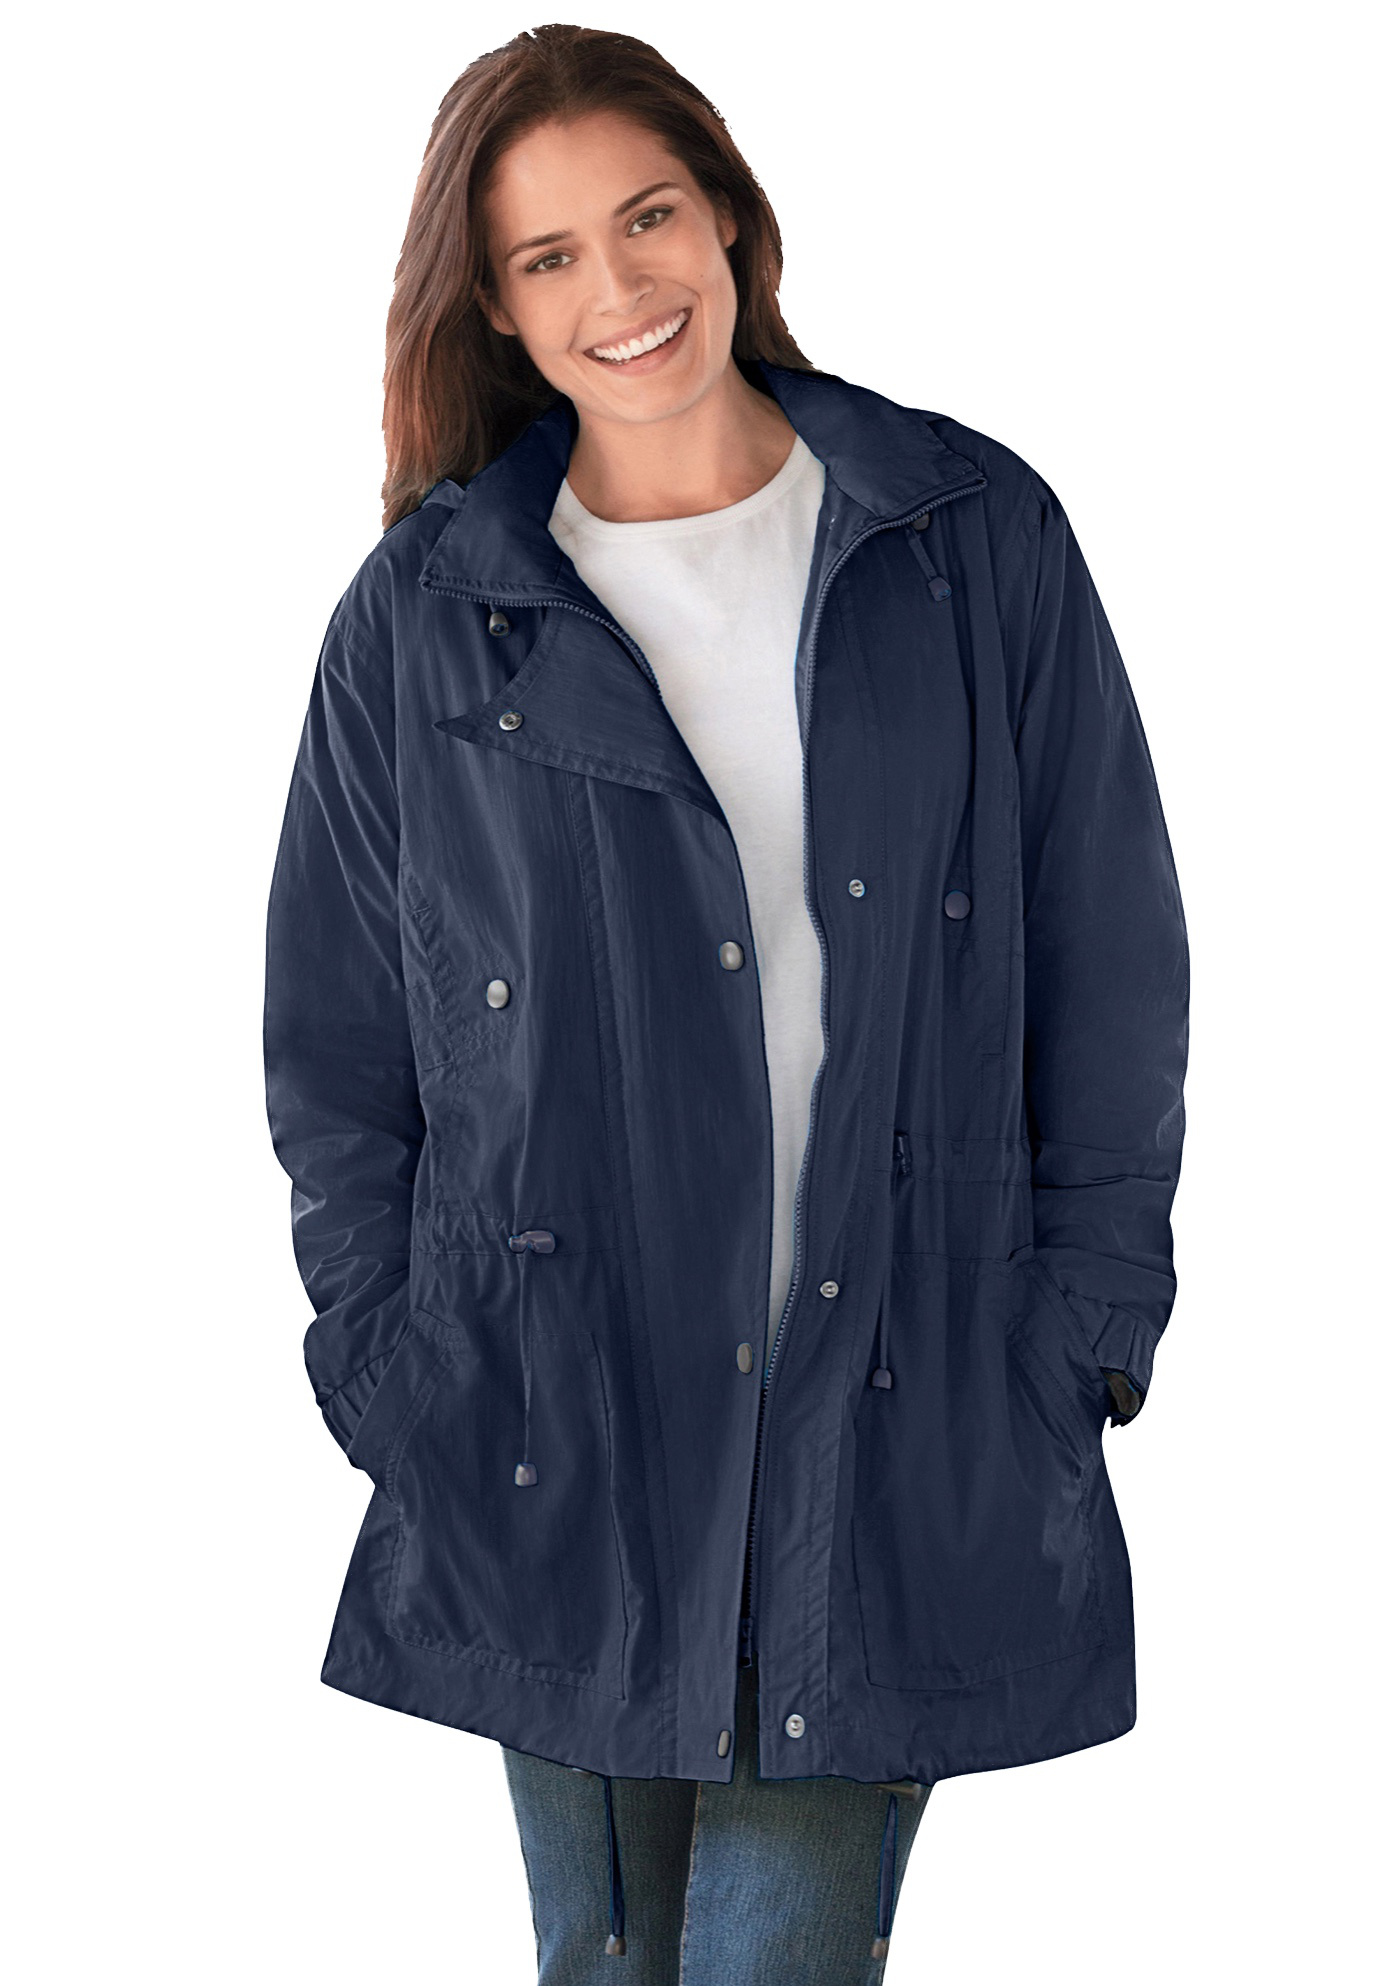 Woman Within Women's Plus Size Fleece-Lined Taslon Anorak Rain Jacket - image 1 of 6